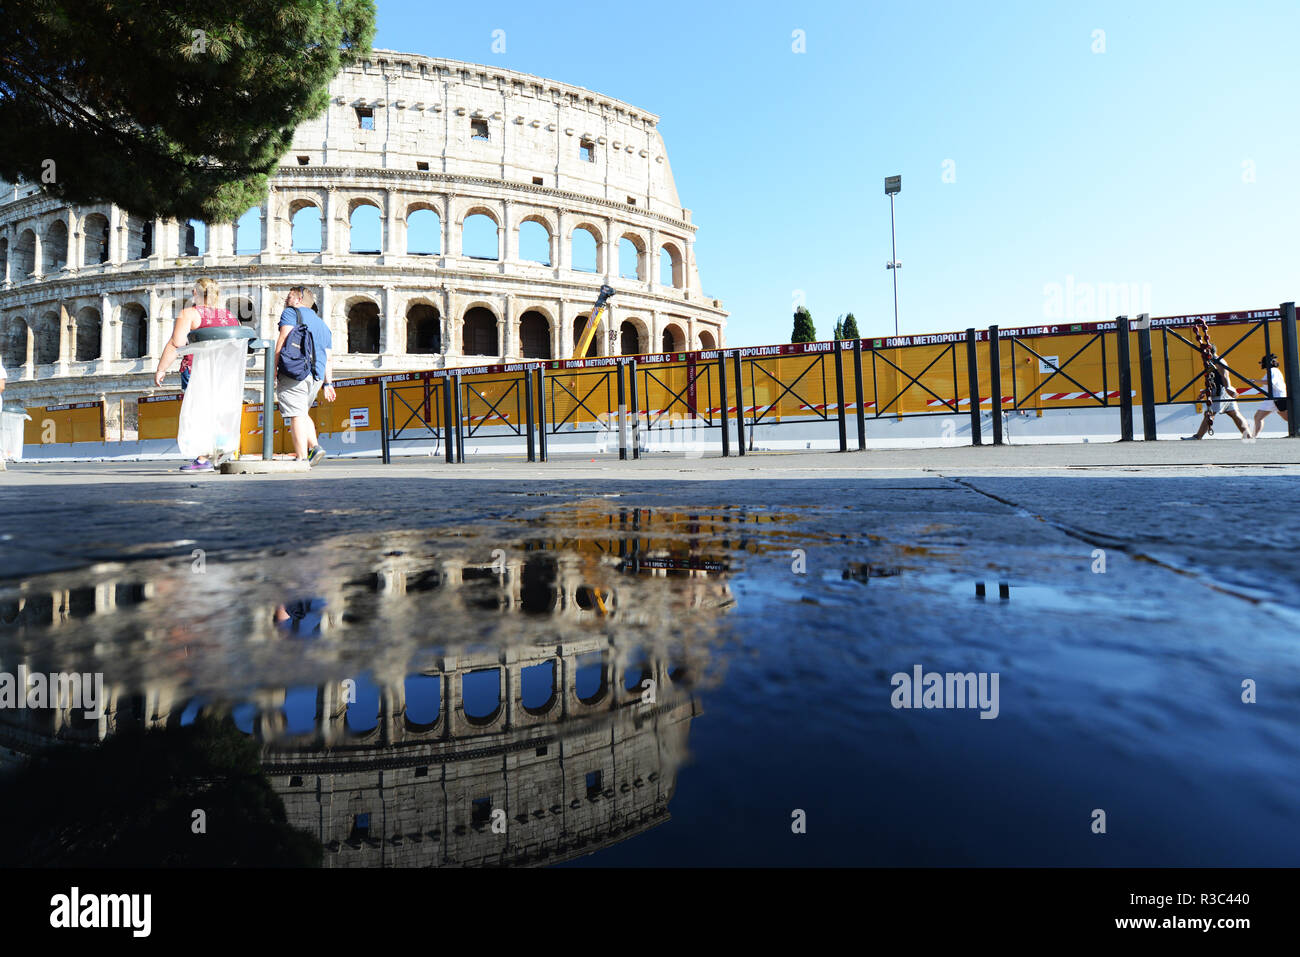 The Colosseum in Rome. Stock Photo